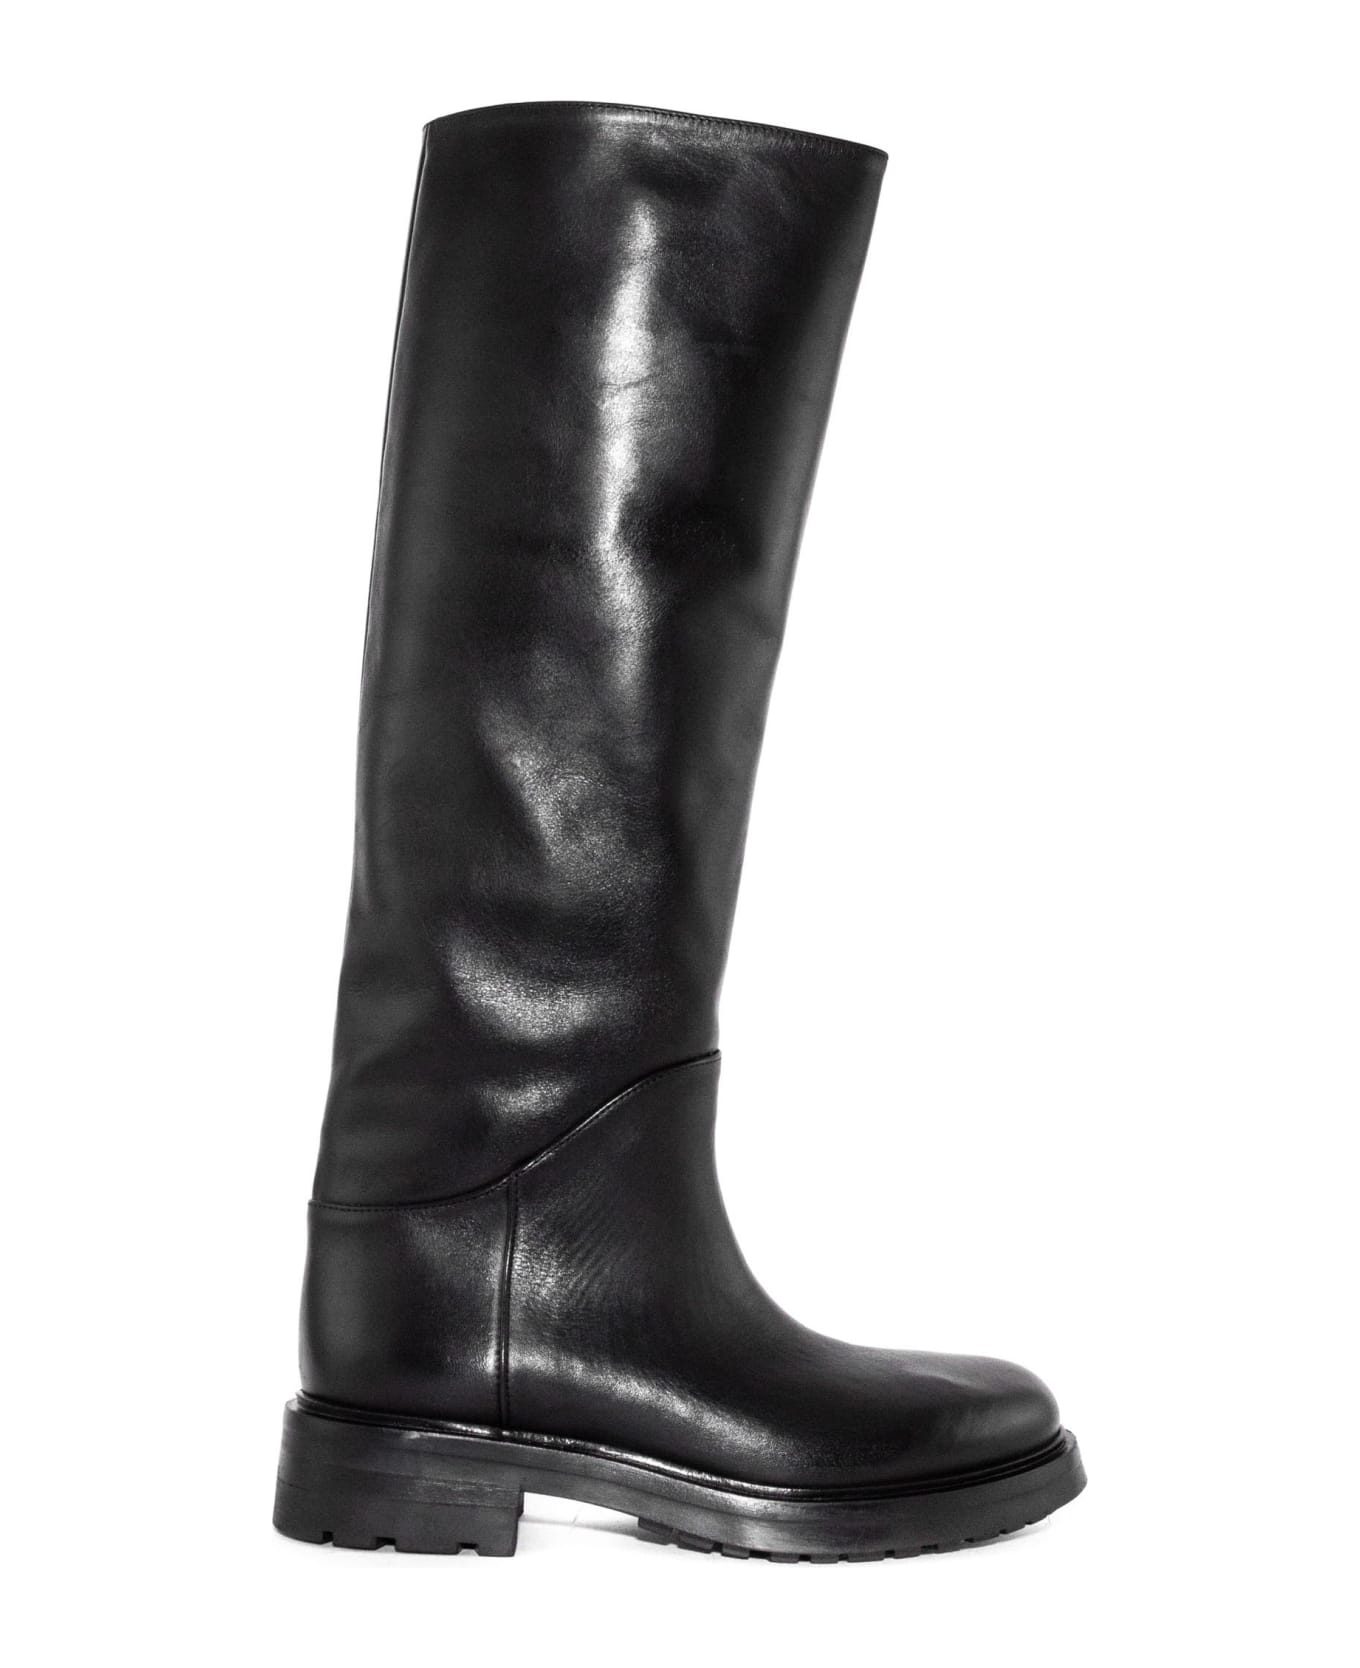 Elena Iachi Black Leather High Boots - Black